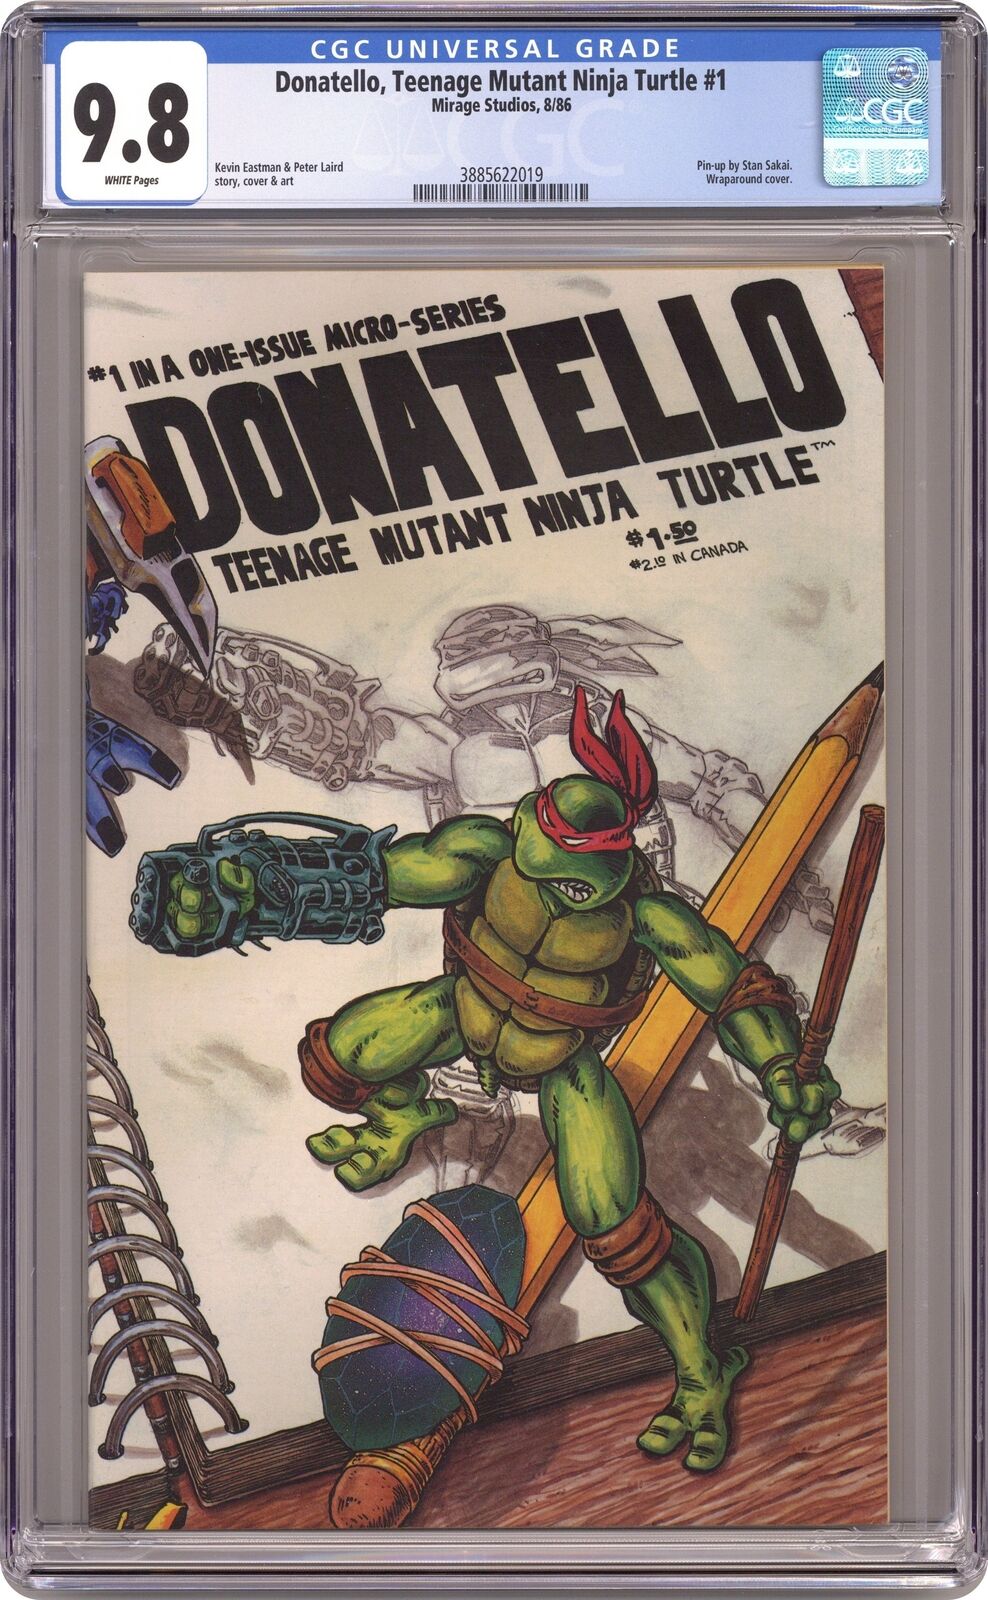 Donatello Teenage Mutant Ninja Turtles #1 CGC 9.8 1986 3885622019